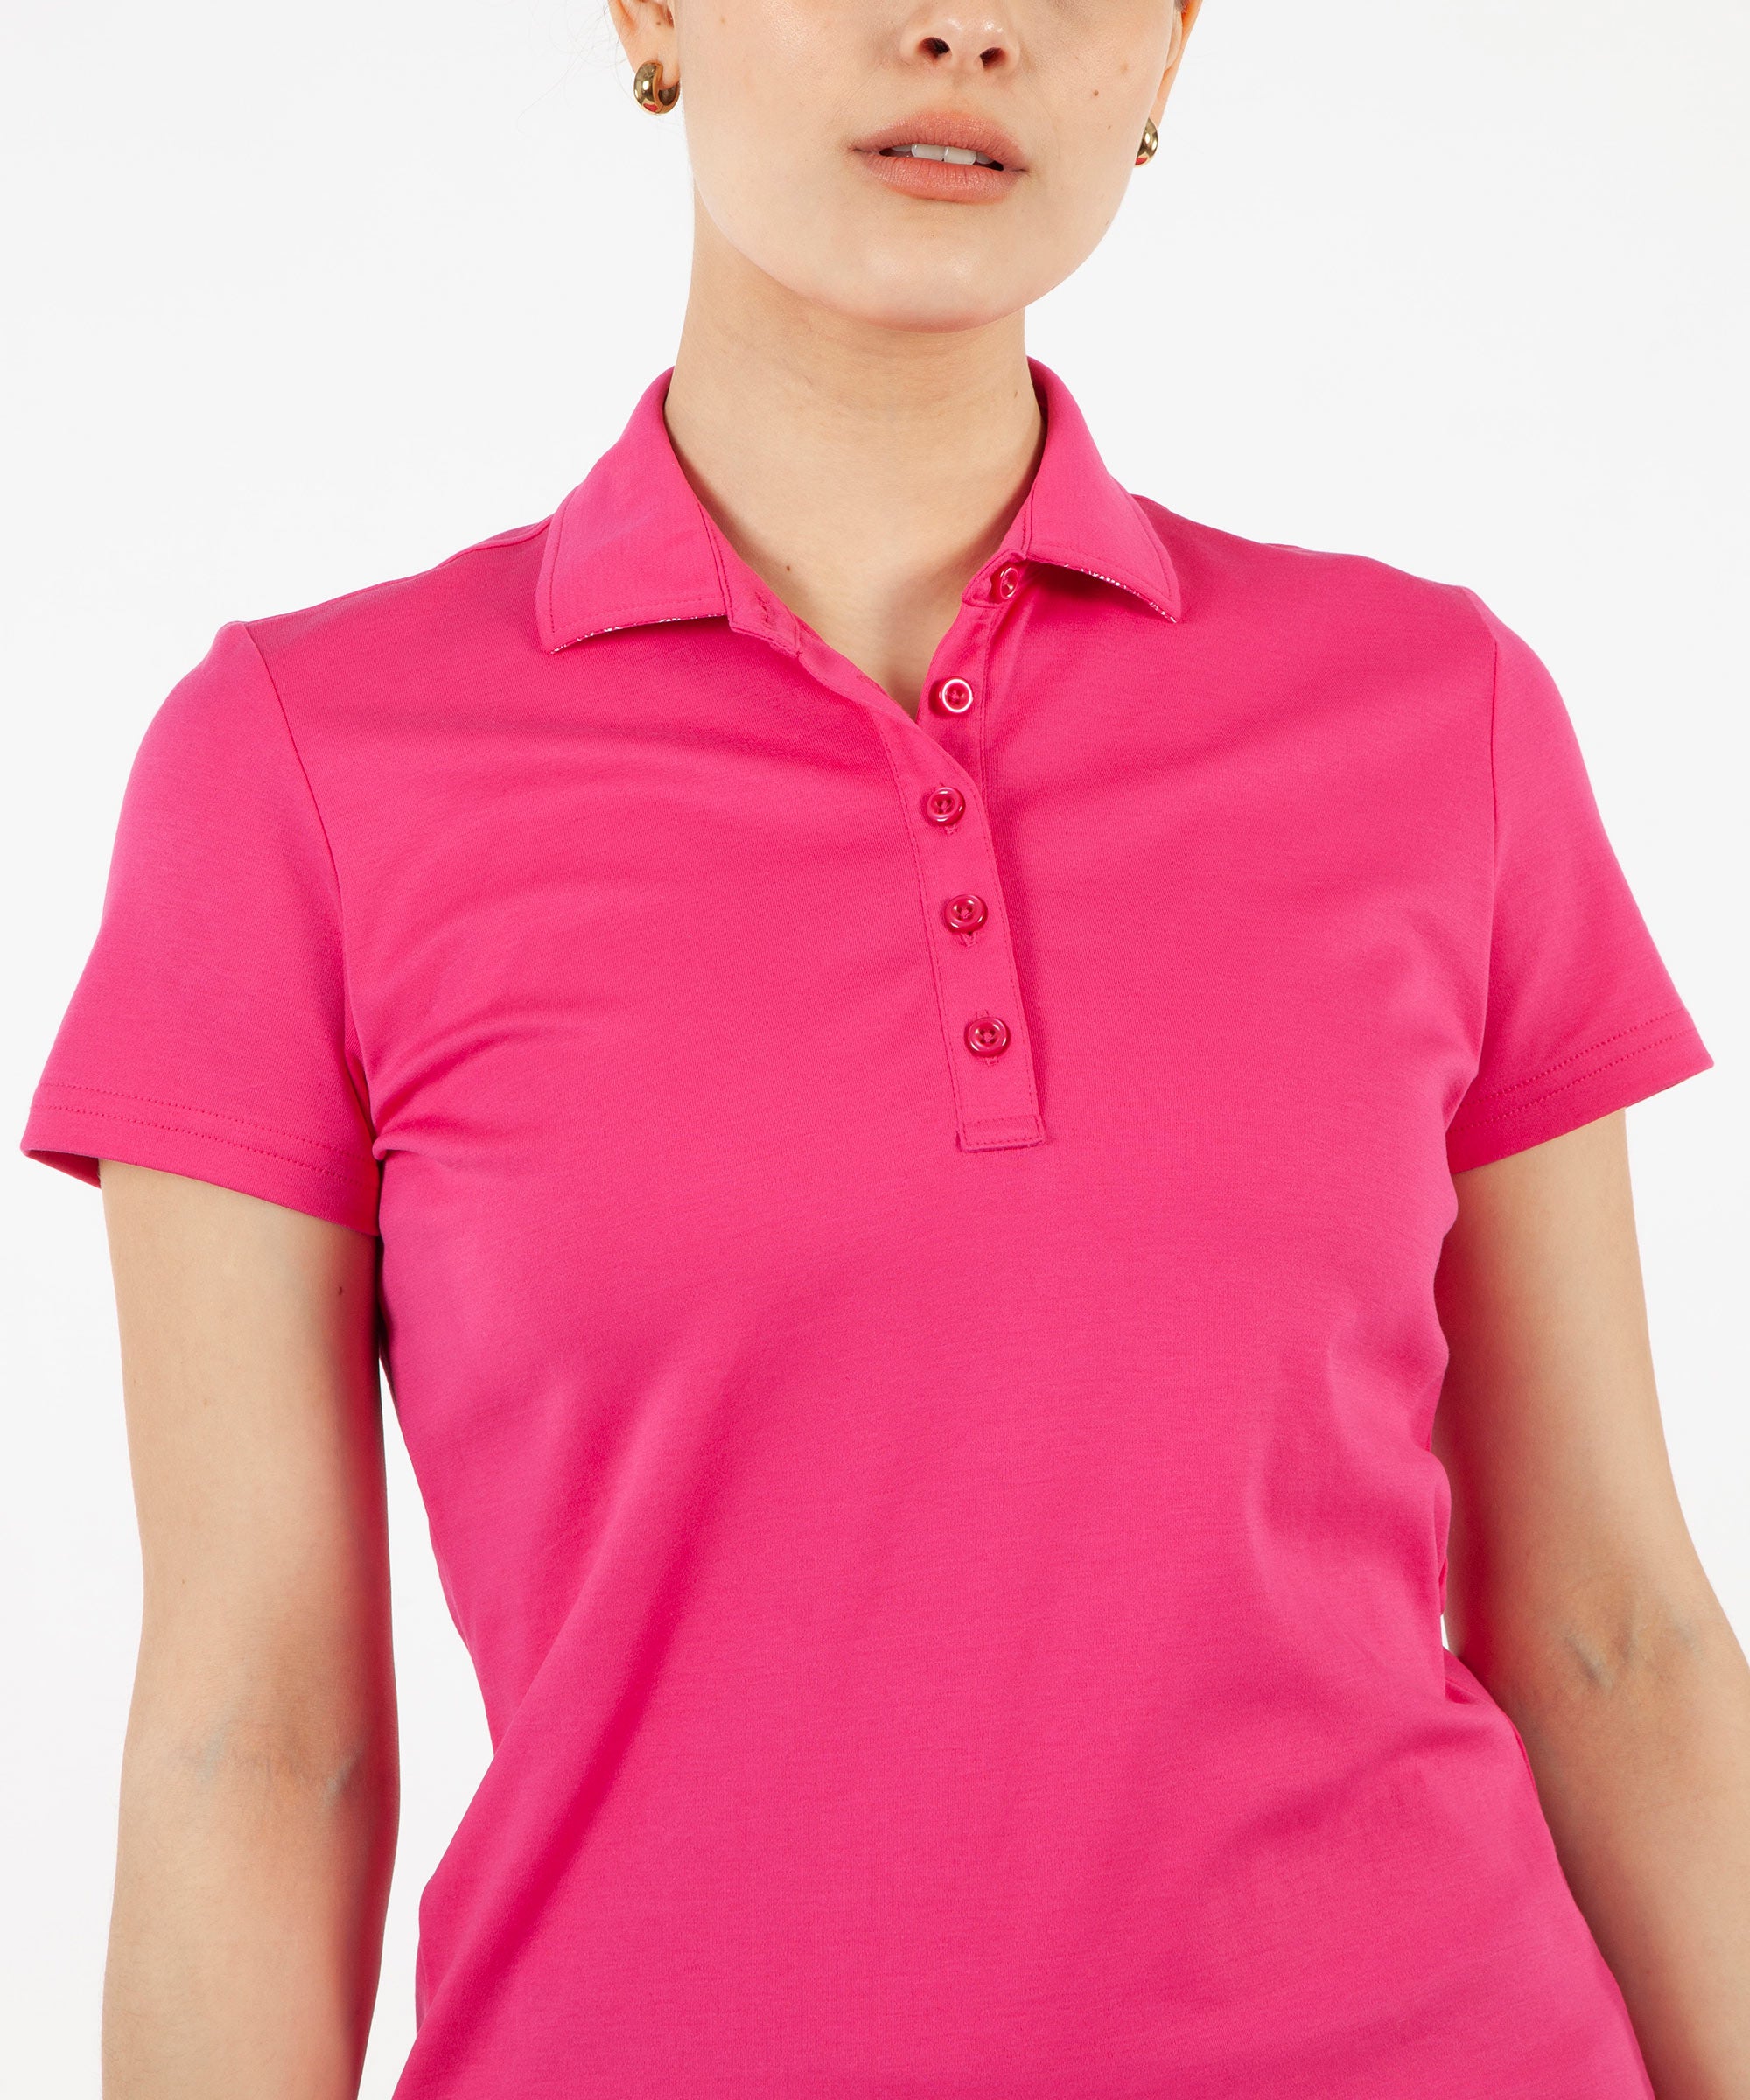 Women's Polo Shirts: Long & Short Sleeve Polos